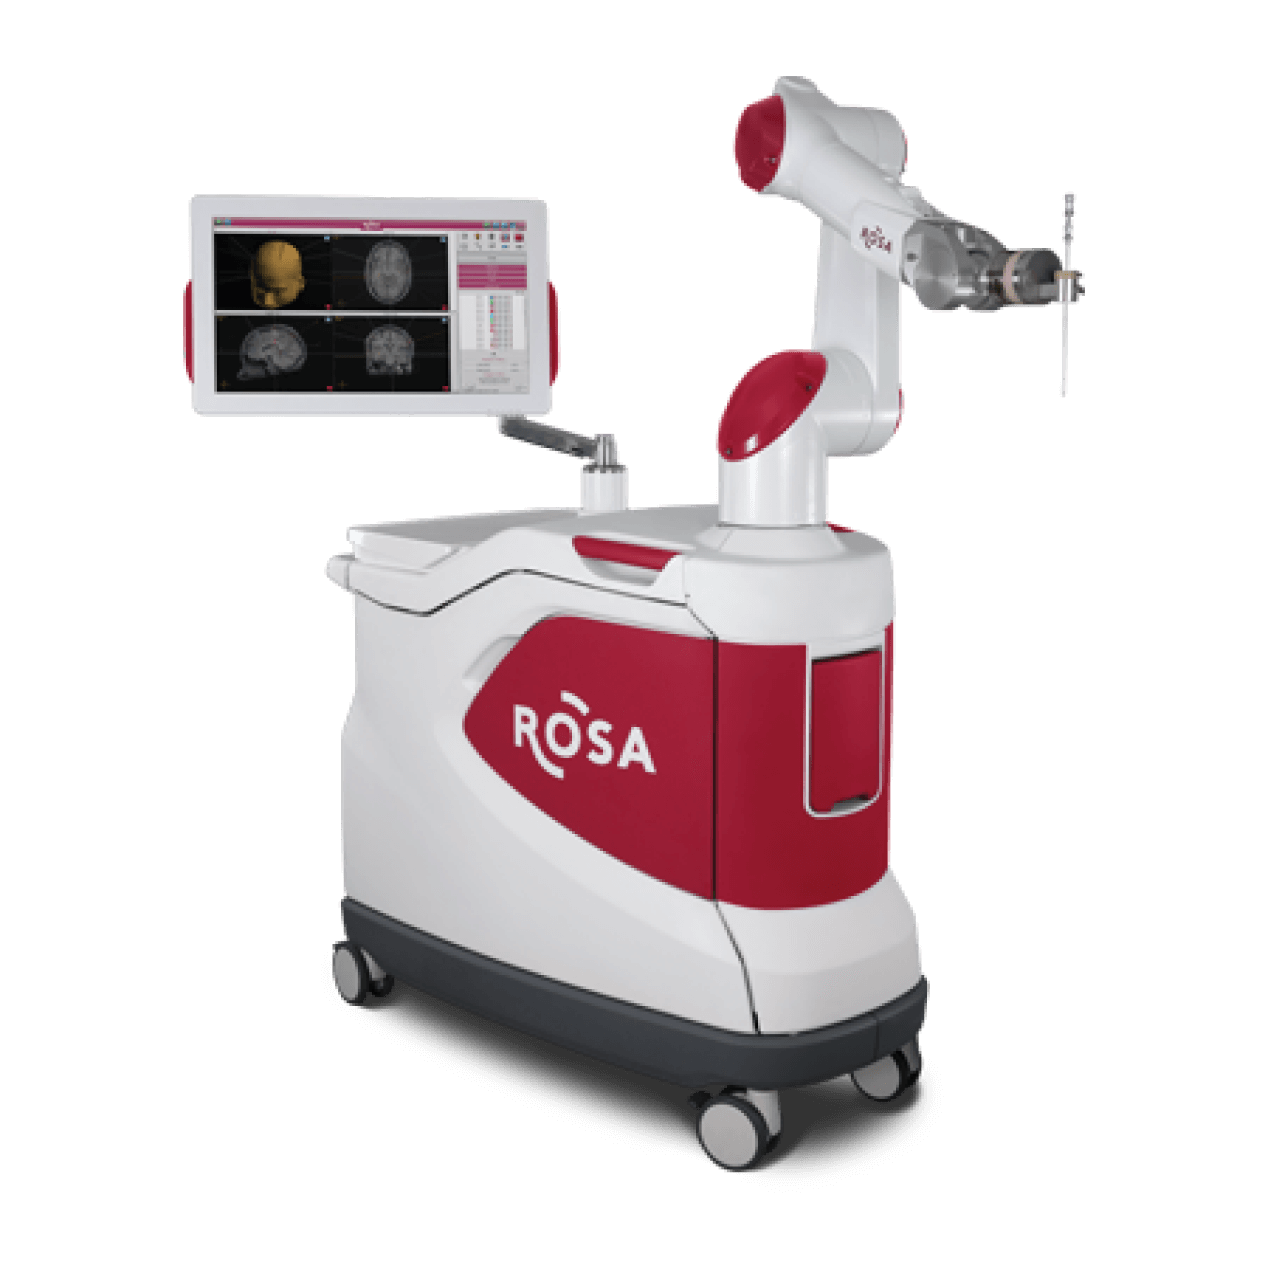 ROSA ONE® Brain Robotic Neurosurgery from Biomet